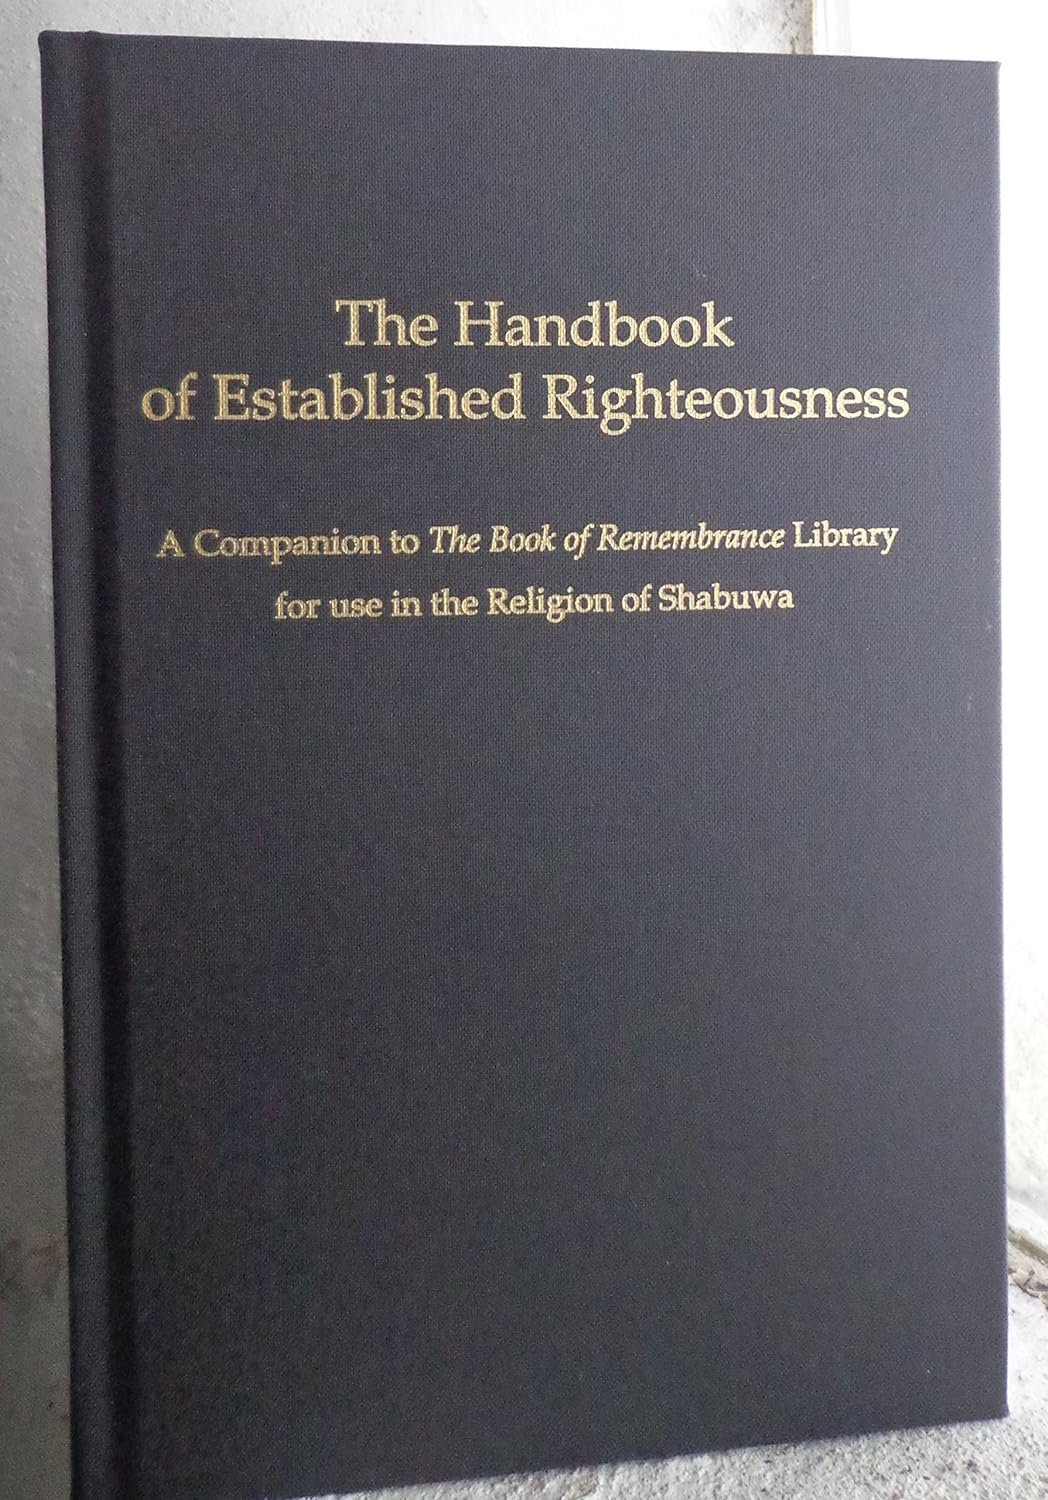 The Handbook of Established Righteousness.jpg